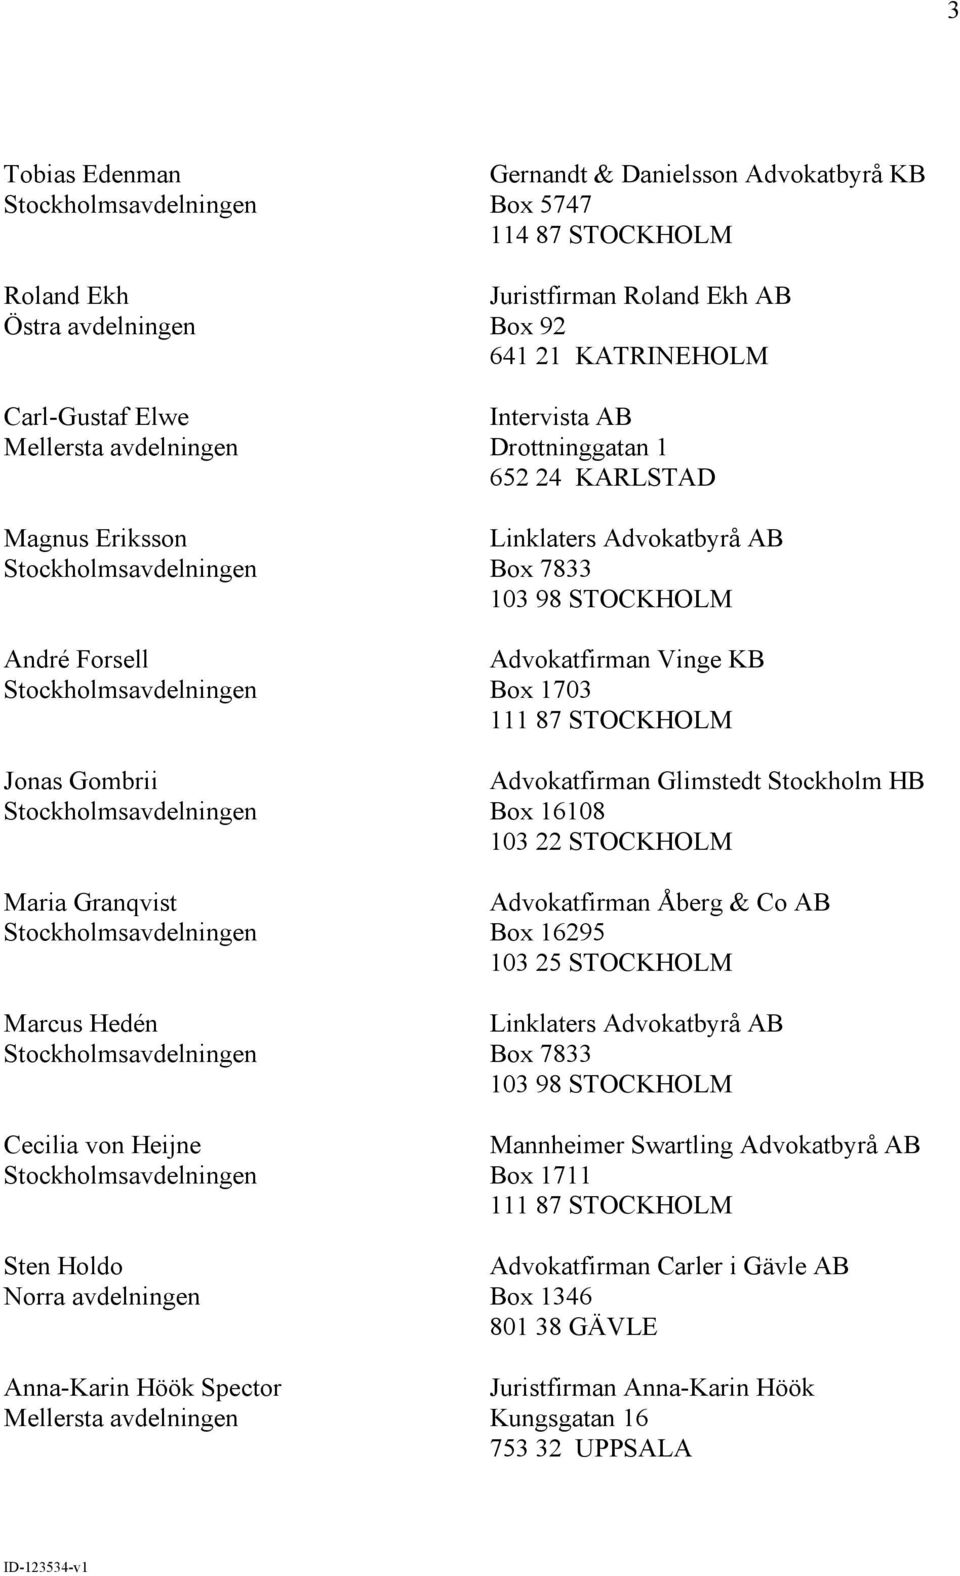 KATRINEHOLM Intervista AB Drottninggatan 1 652 24 KARLSTAD Box 1703 Advokatfirman Glimstedt Stockholm HB Box 16108 103 22 STOCKHOLM Advokatfirman